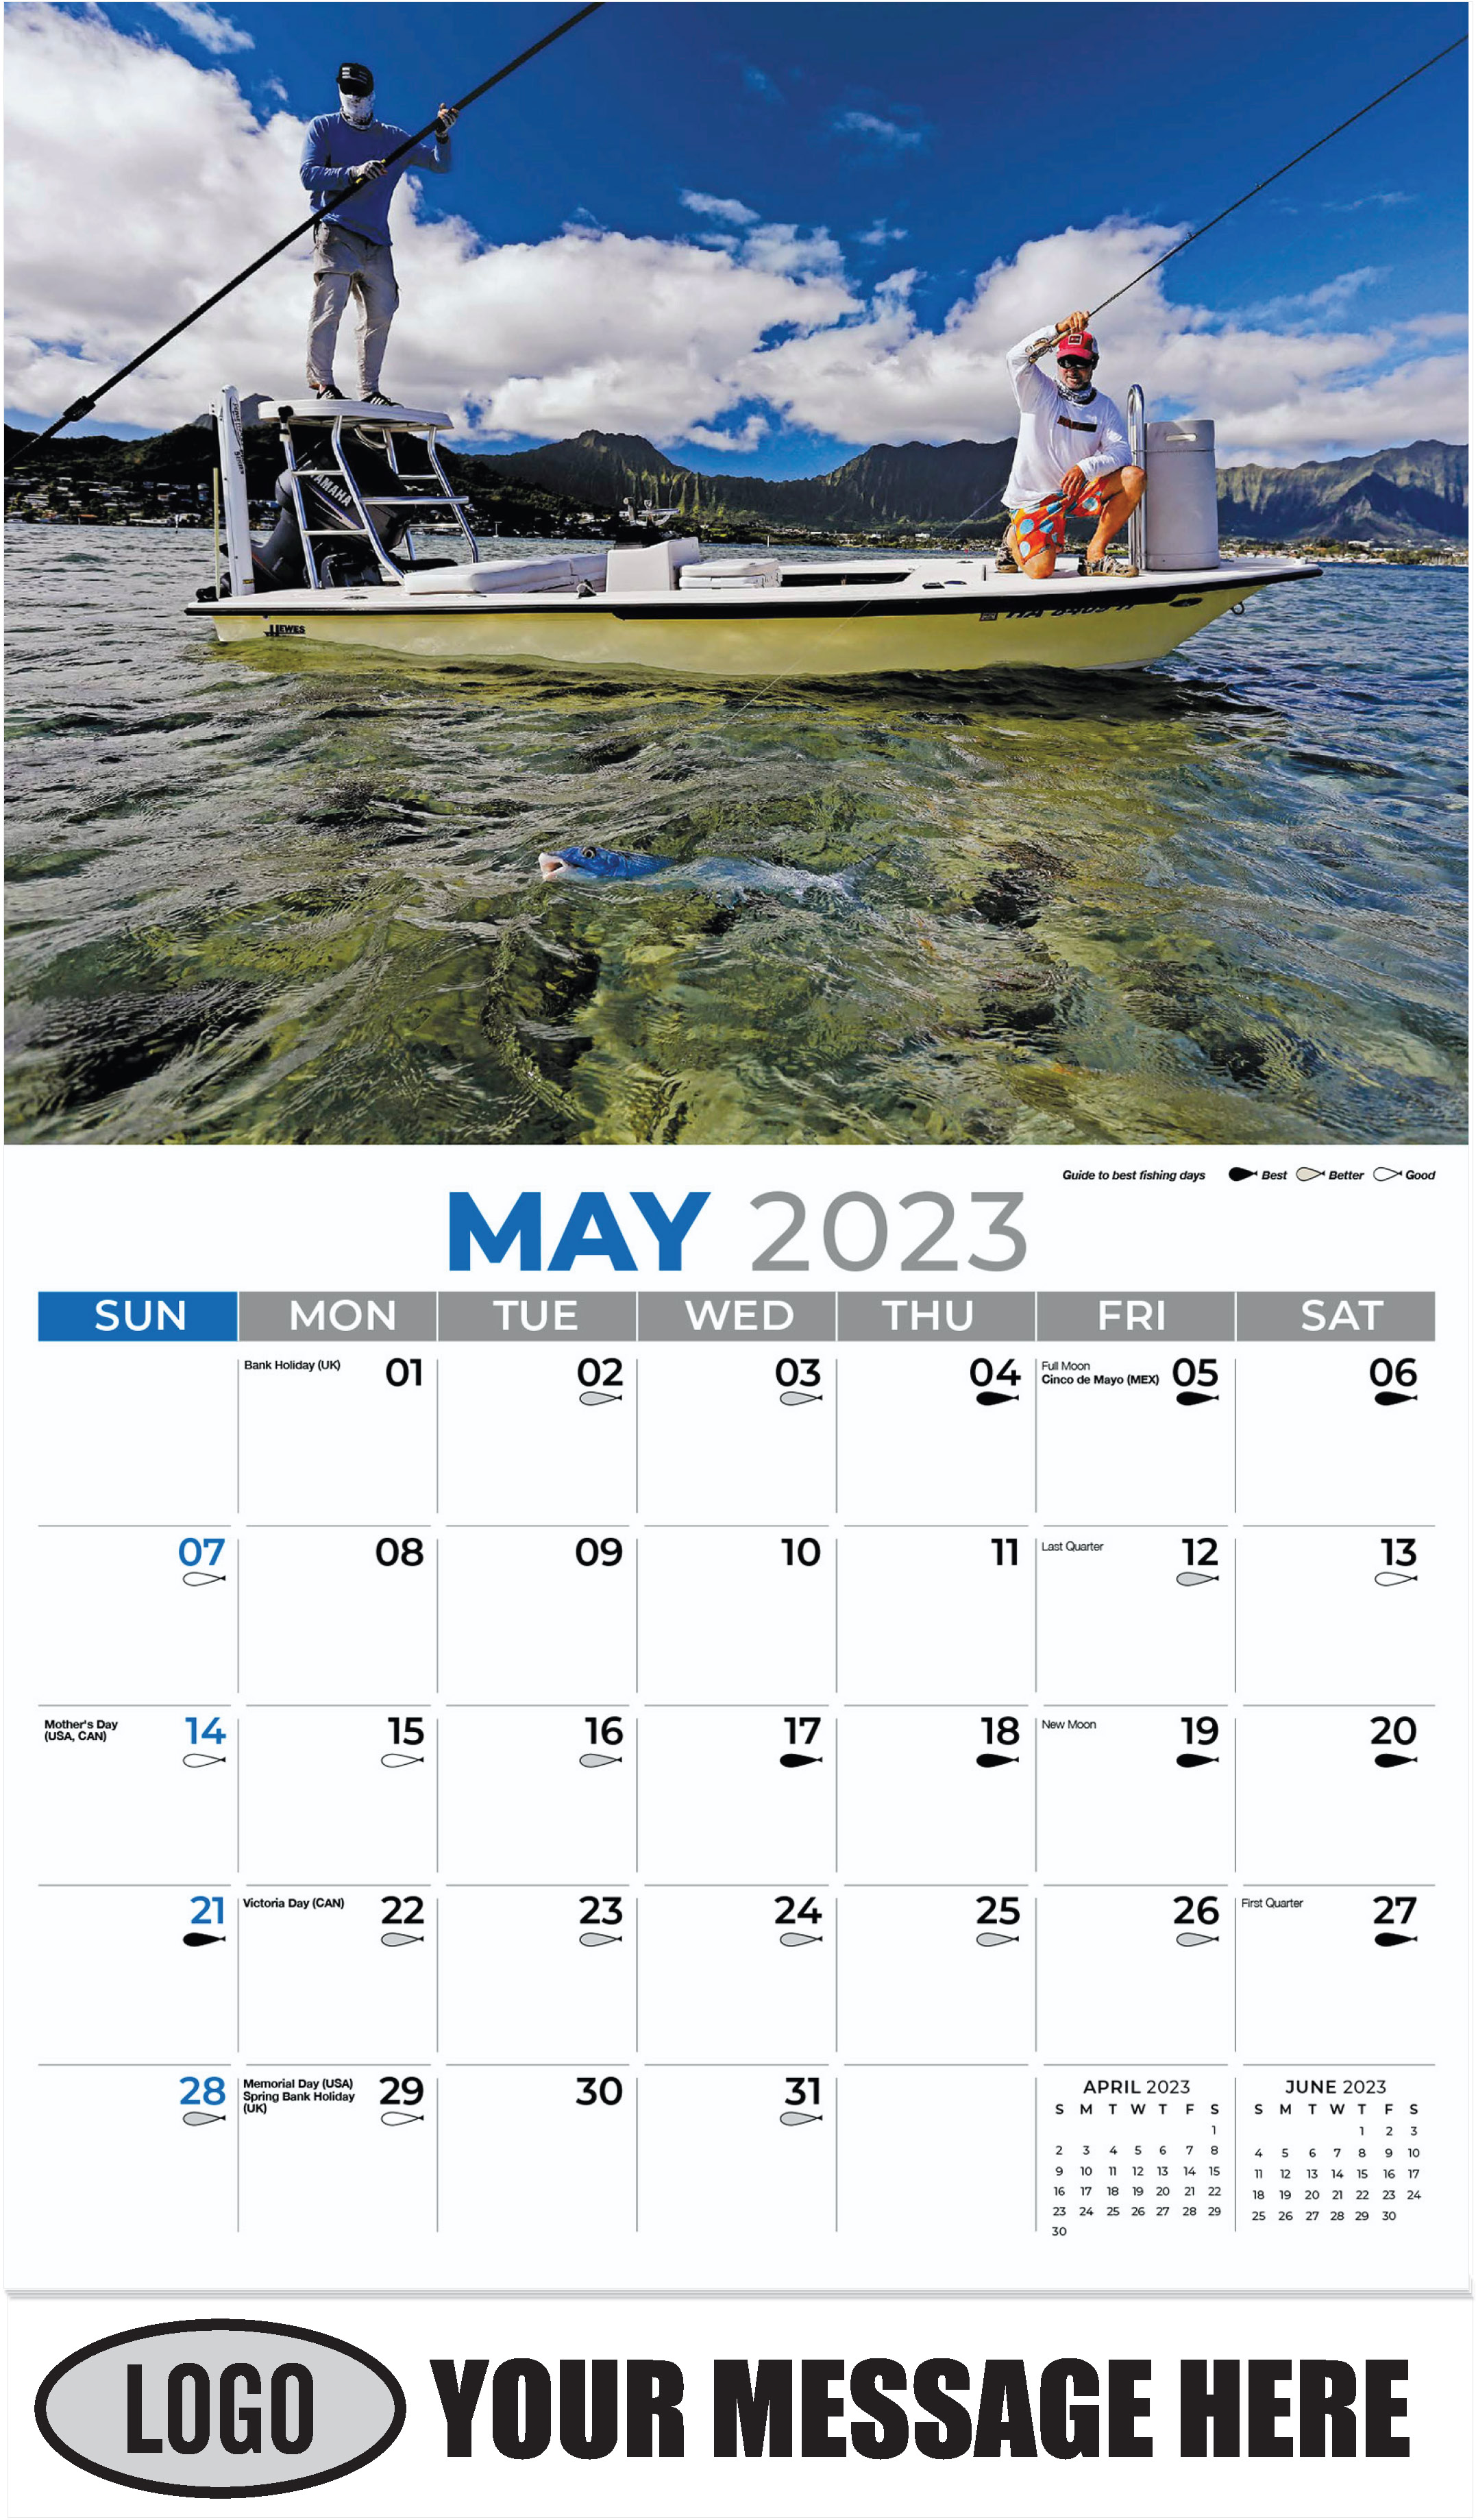 May - Fishing & Hunting 2023 Promotional Calendar